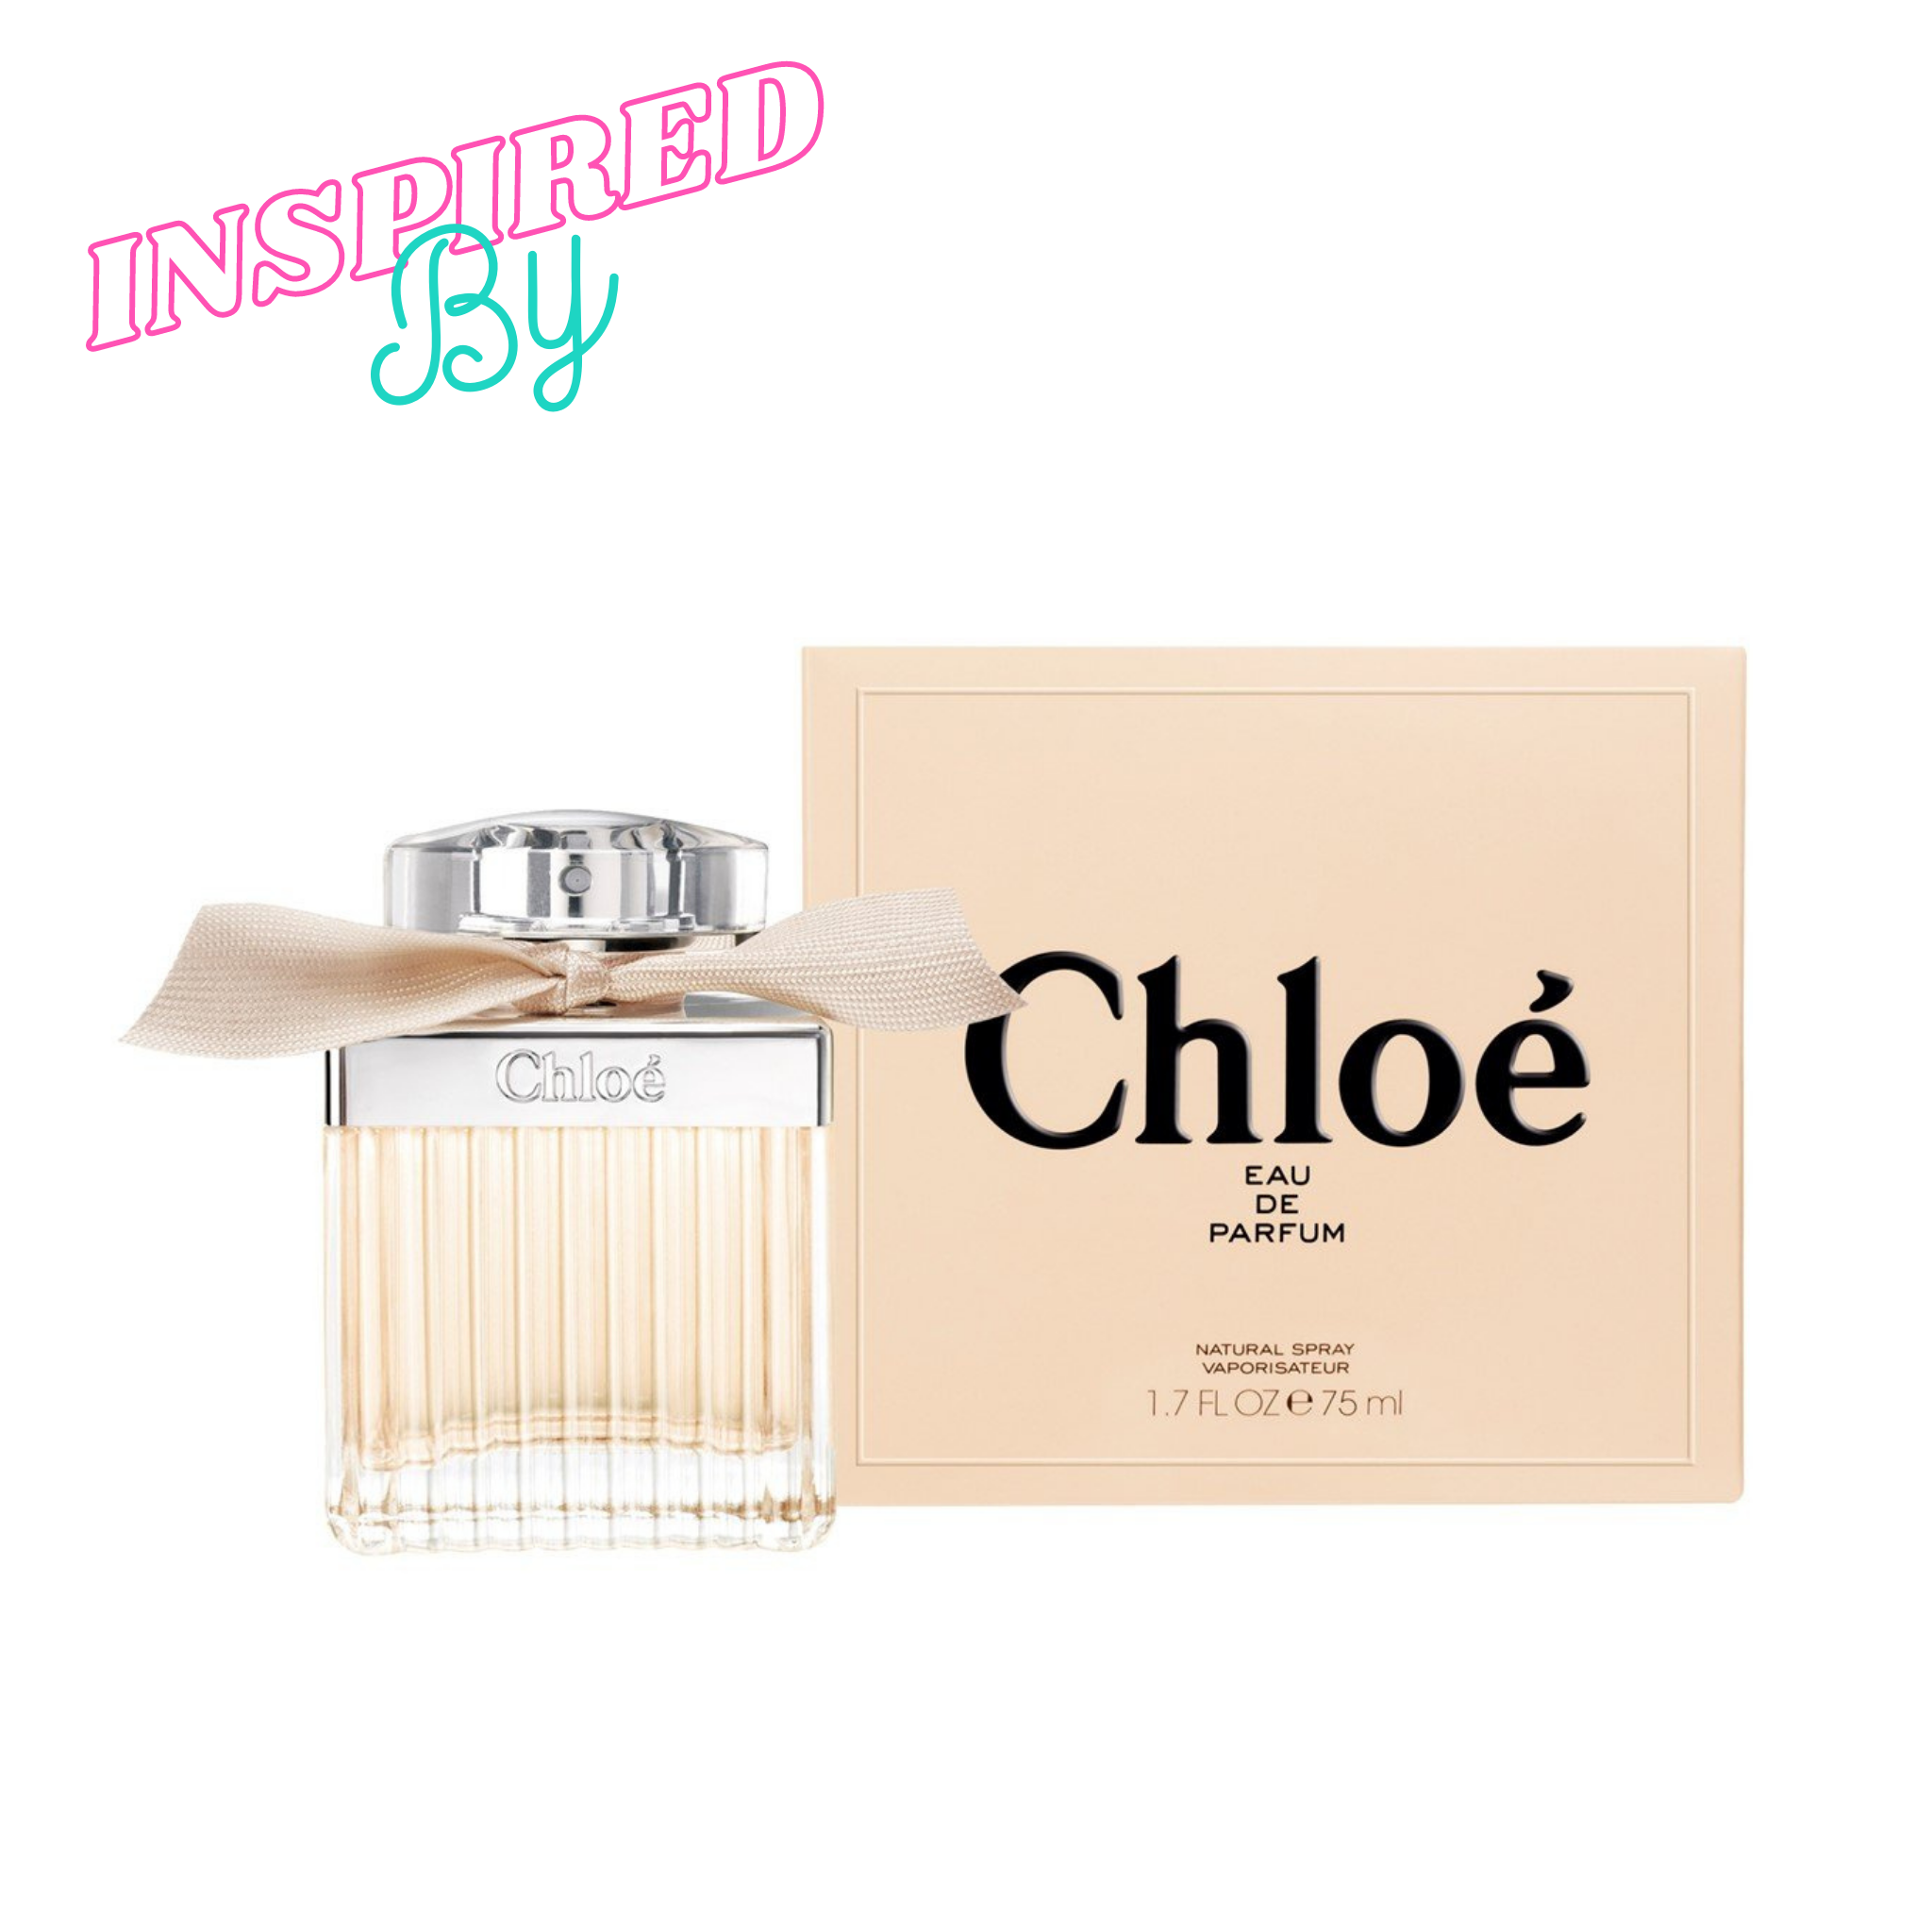 Inspired by Chloe Chloe 100ml - Fragrance Deliver SA